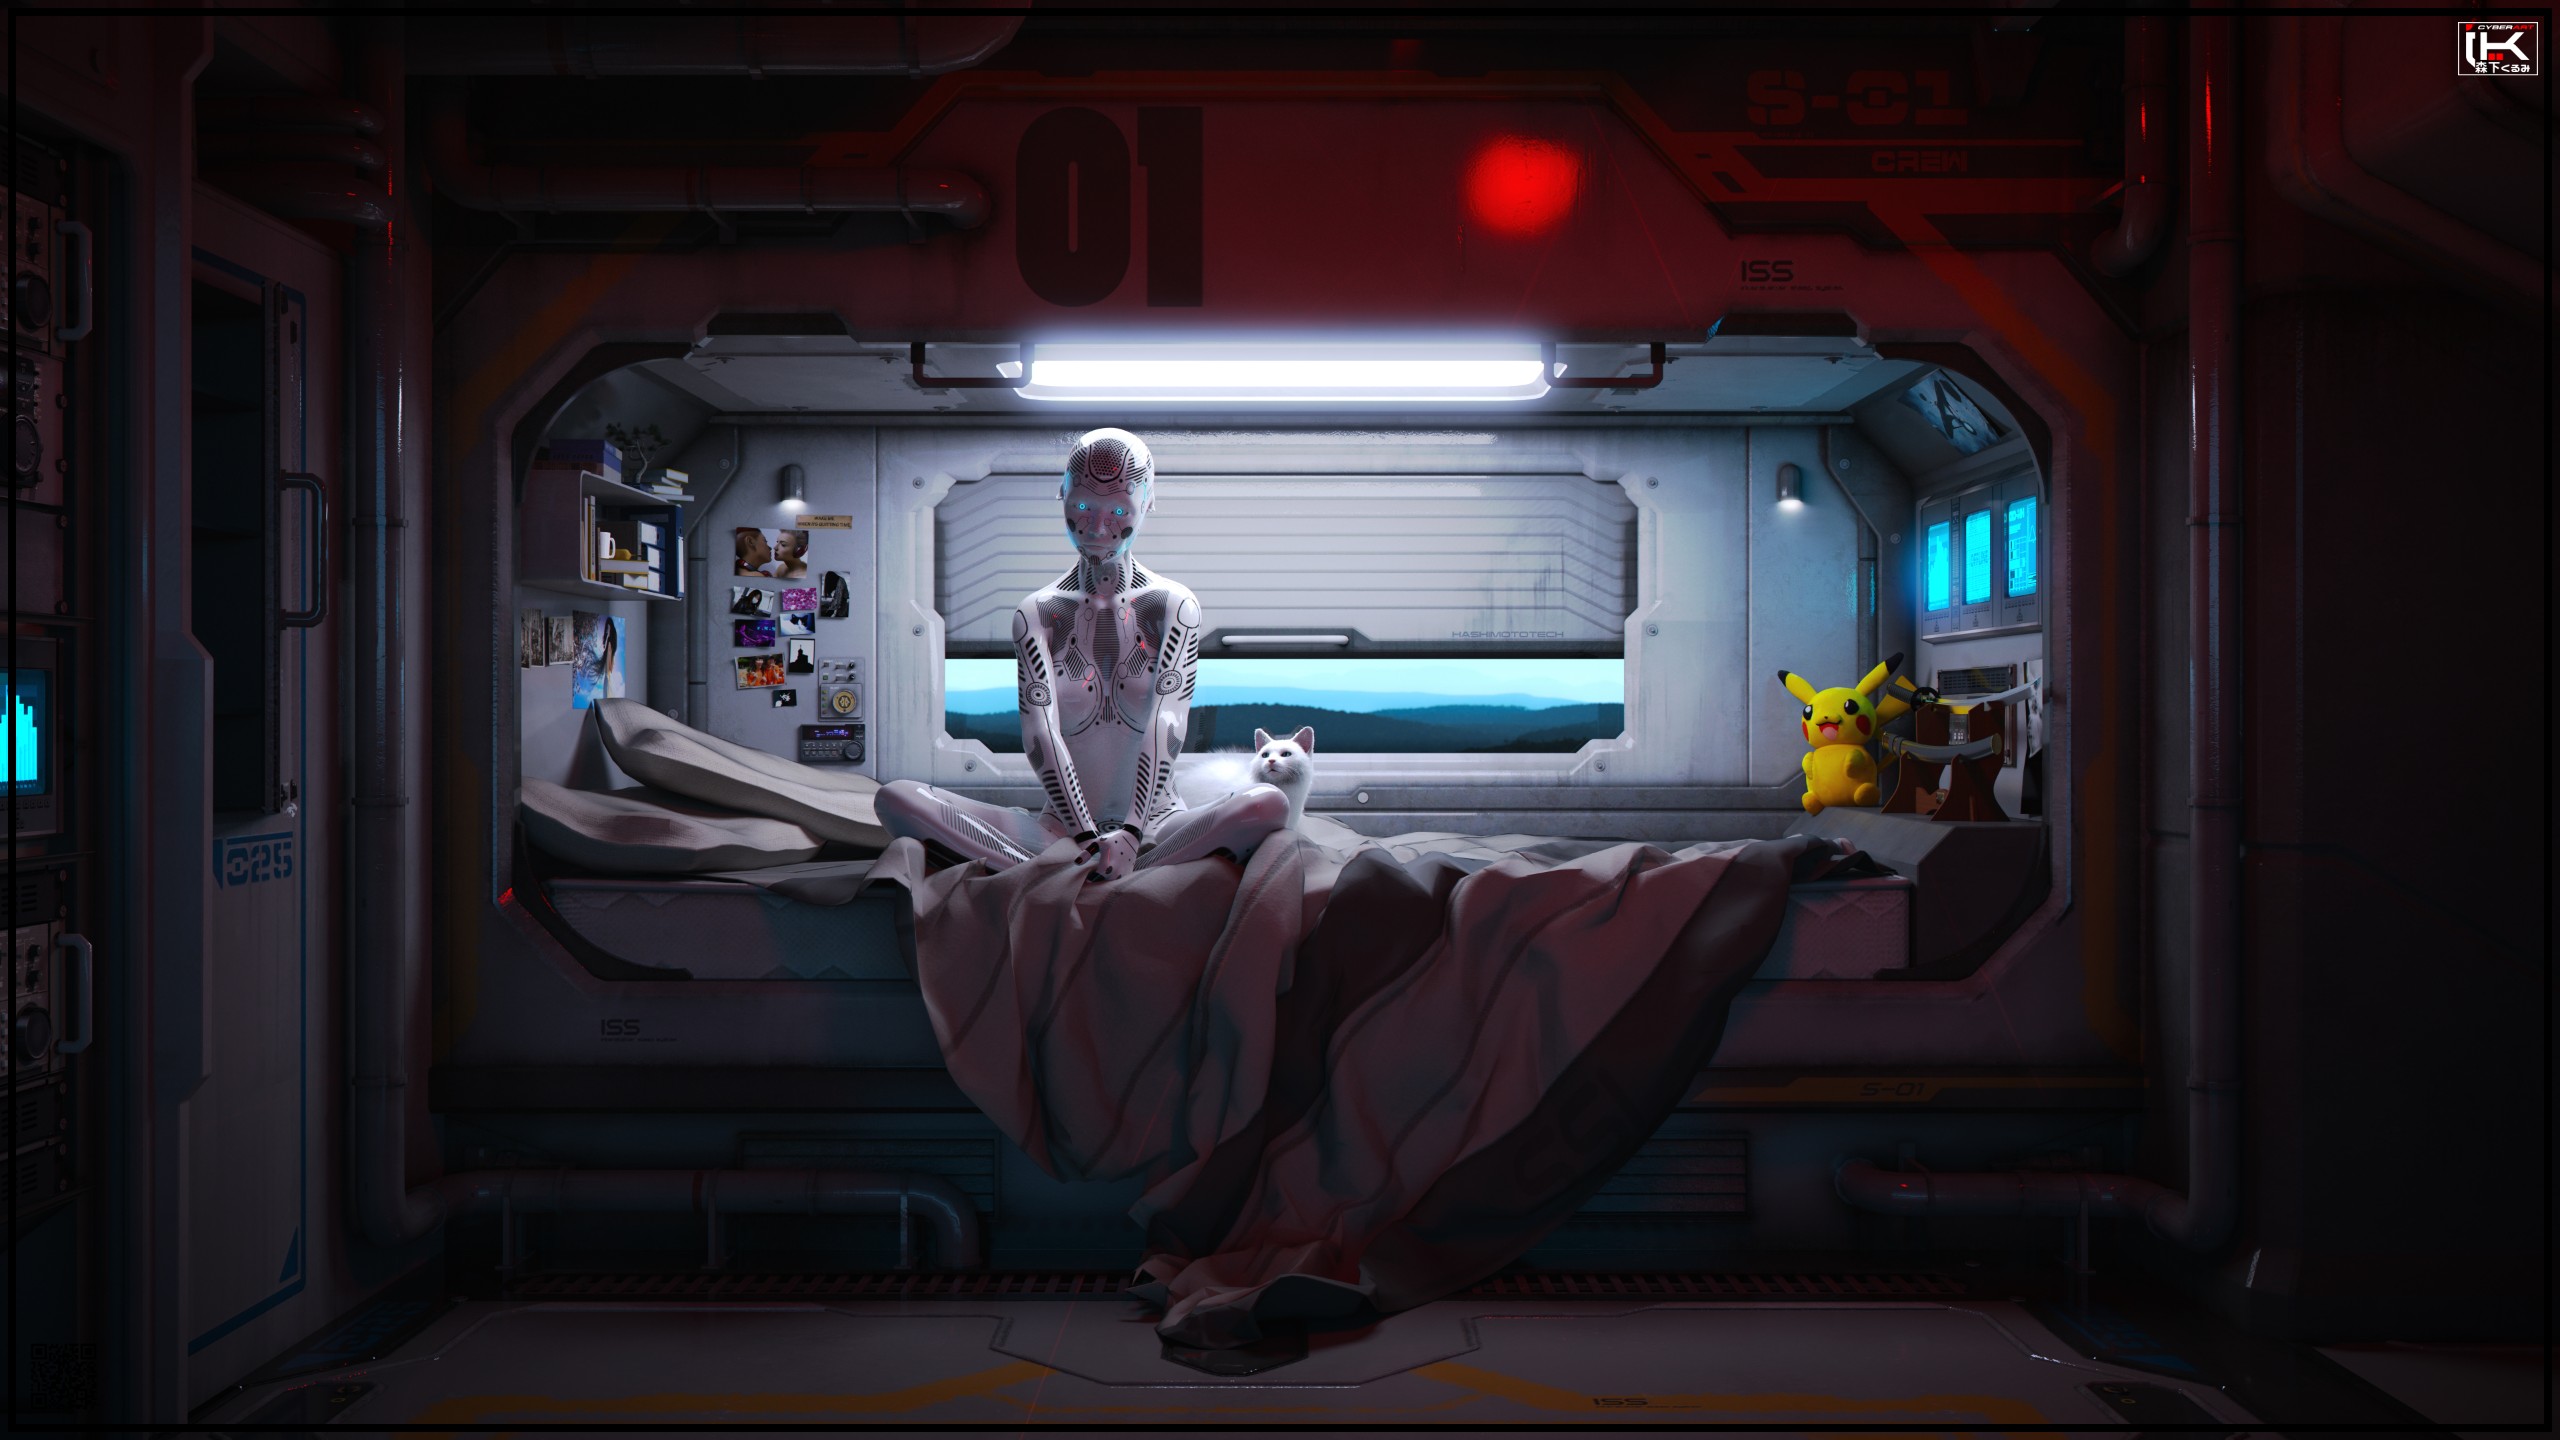 General 2560x1440 space station robot futuristic cyborg CGI science fiction cats machine blue eyes sitting digital art androids humanoid Pikachu window sill